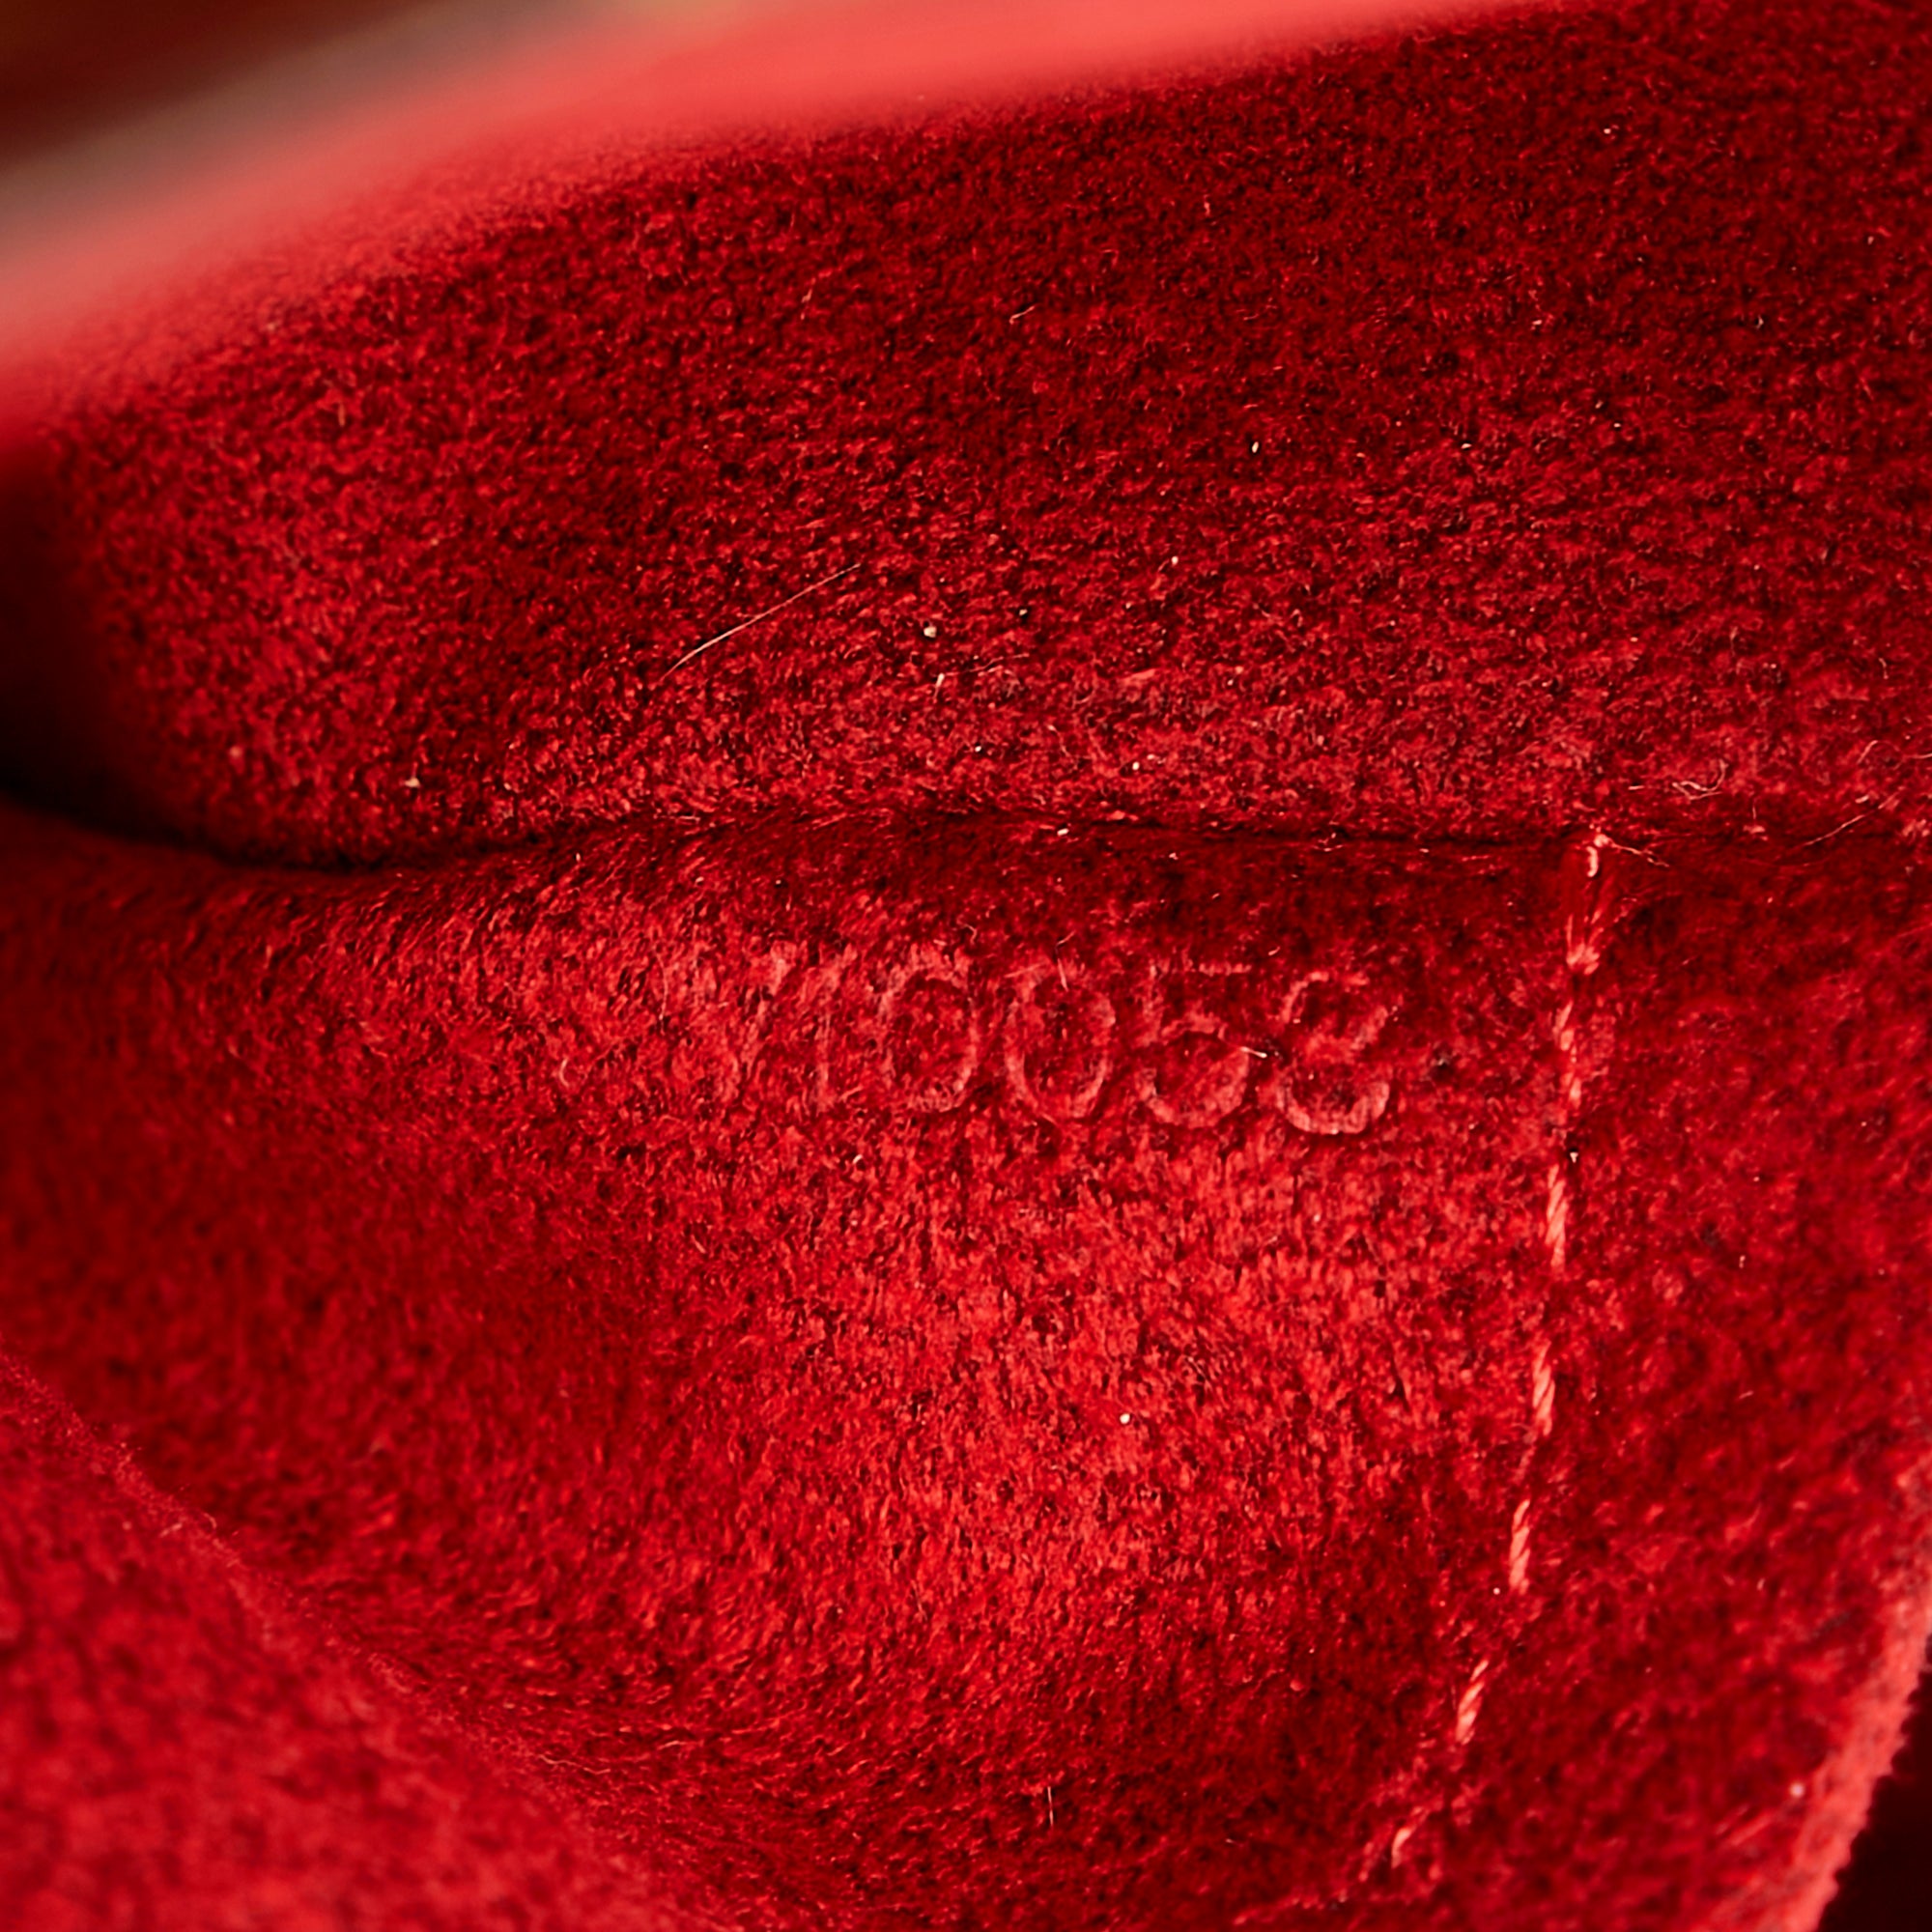 Preloved Louis Vuitton Sonatine Monogram Handbag VI0052 092623 $400 OFF  Flash Sale